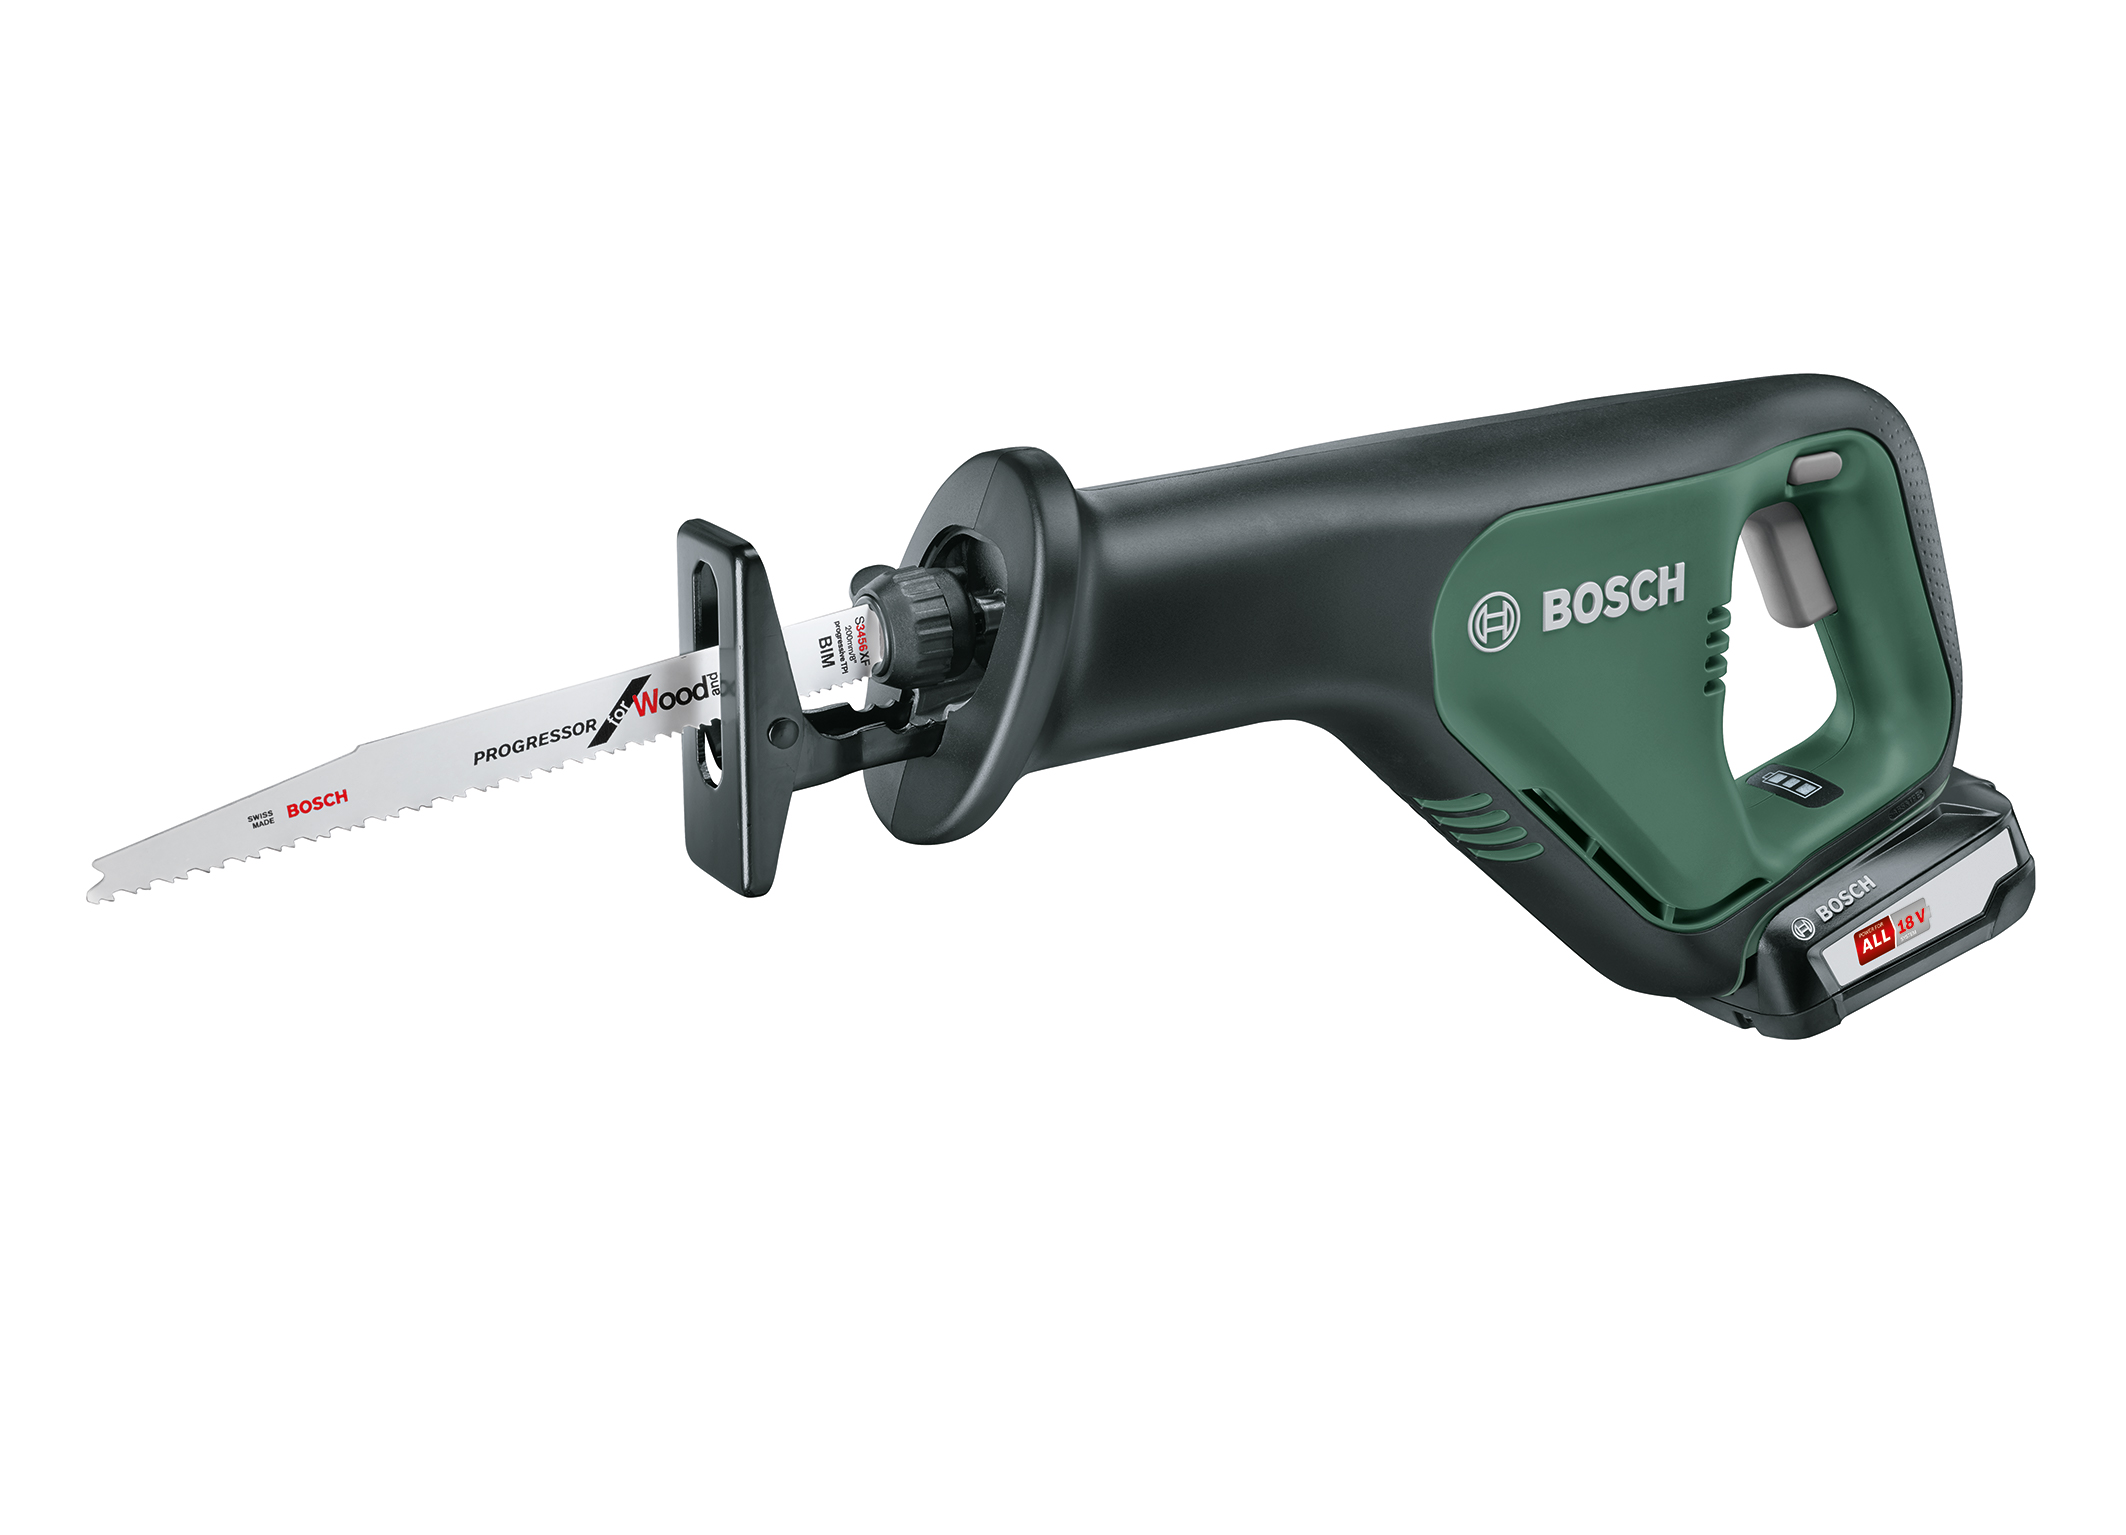 Bosch expands 18 volt system for DIY enthusiasts: AdvancedRecip 18 reciprocating saw